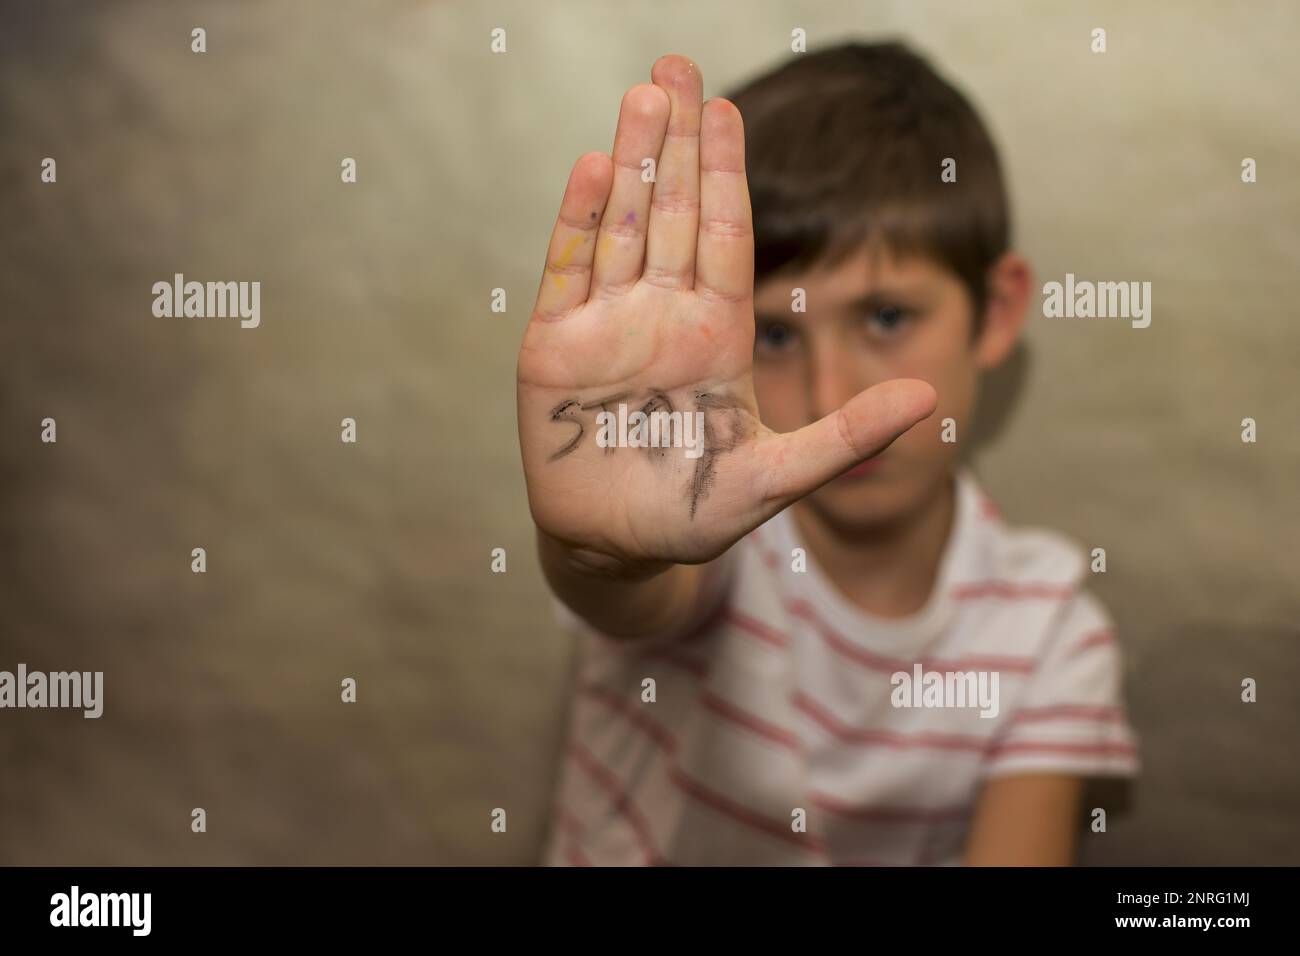 Stop bullying, sad kid, social problems of humanity Stock Photo